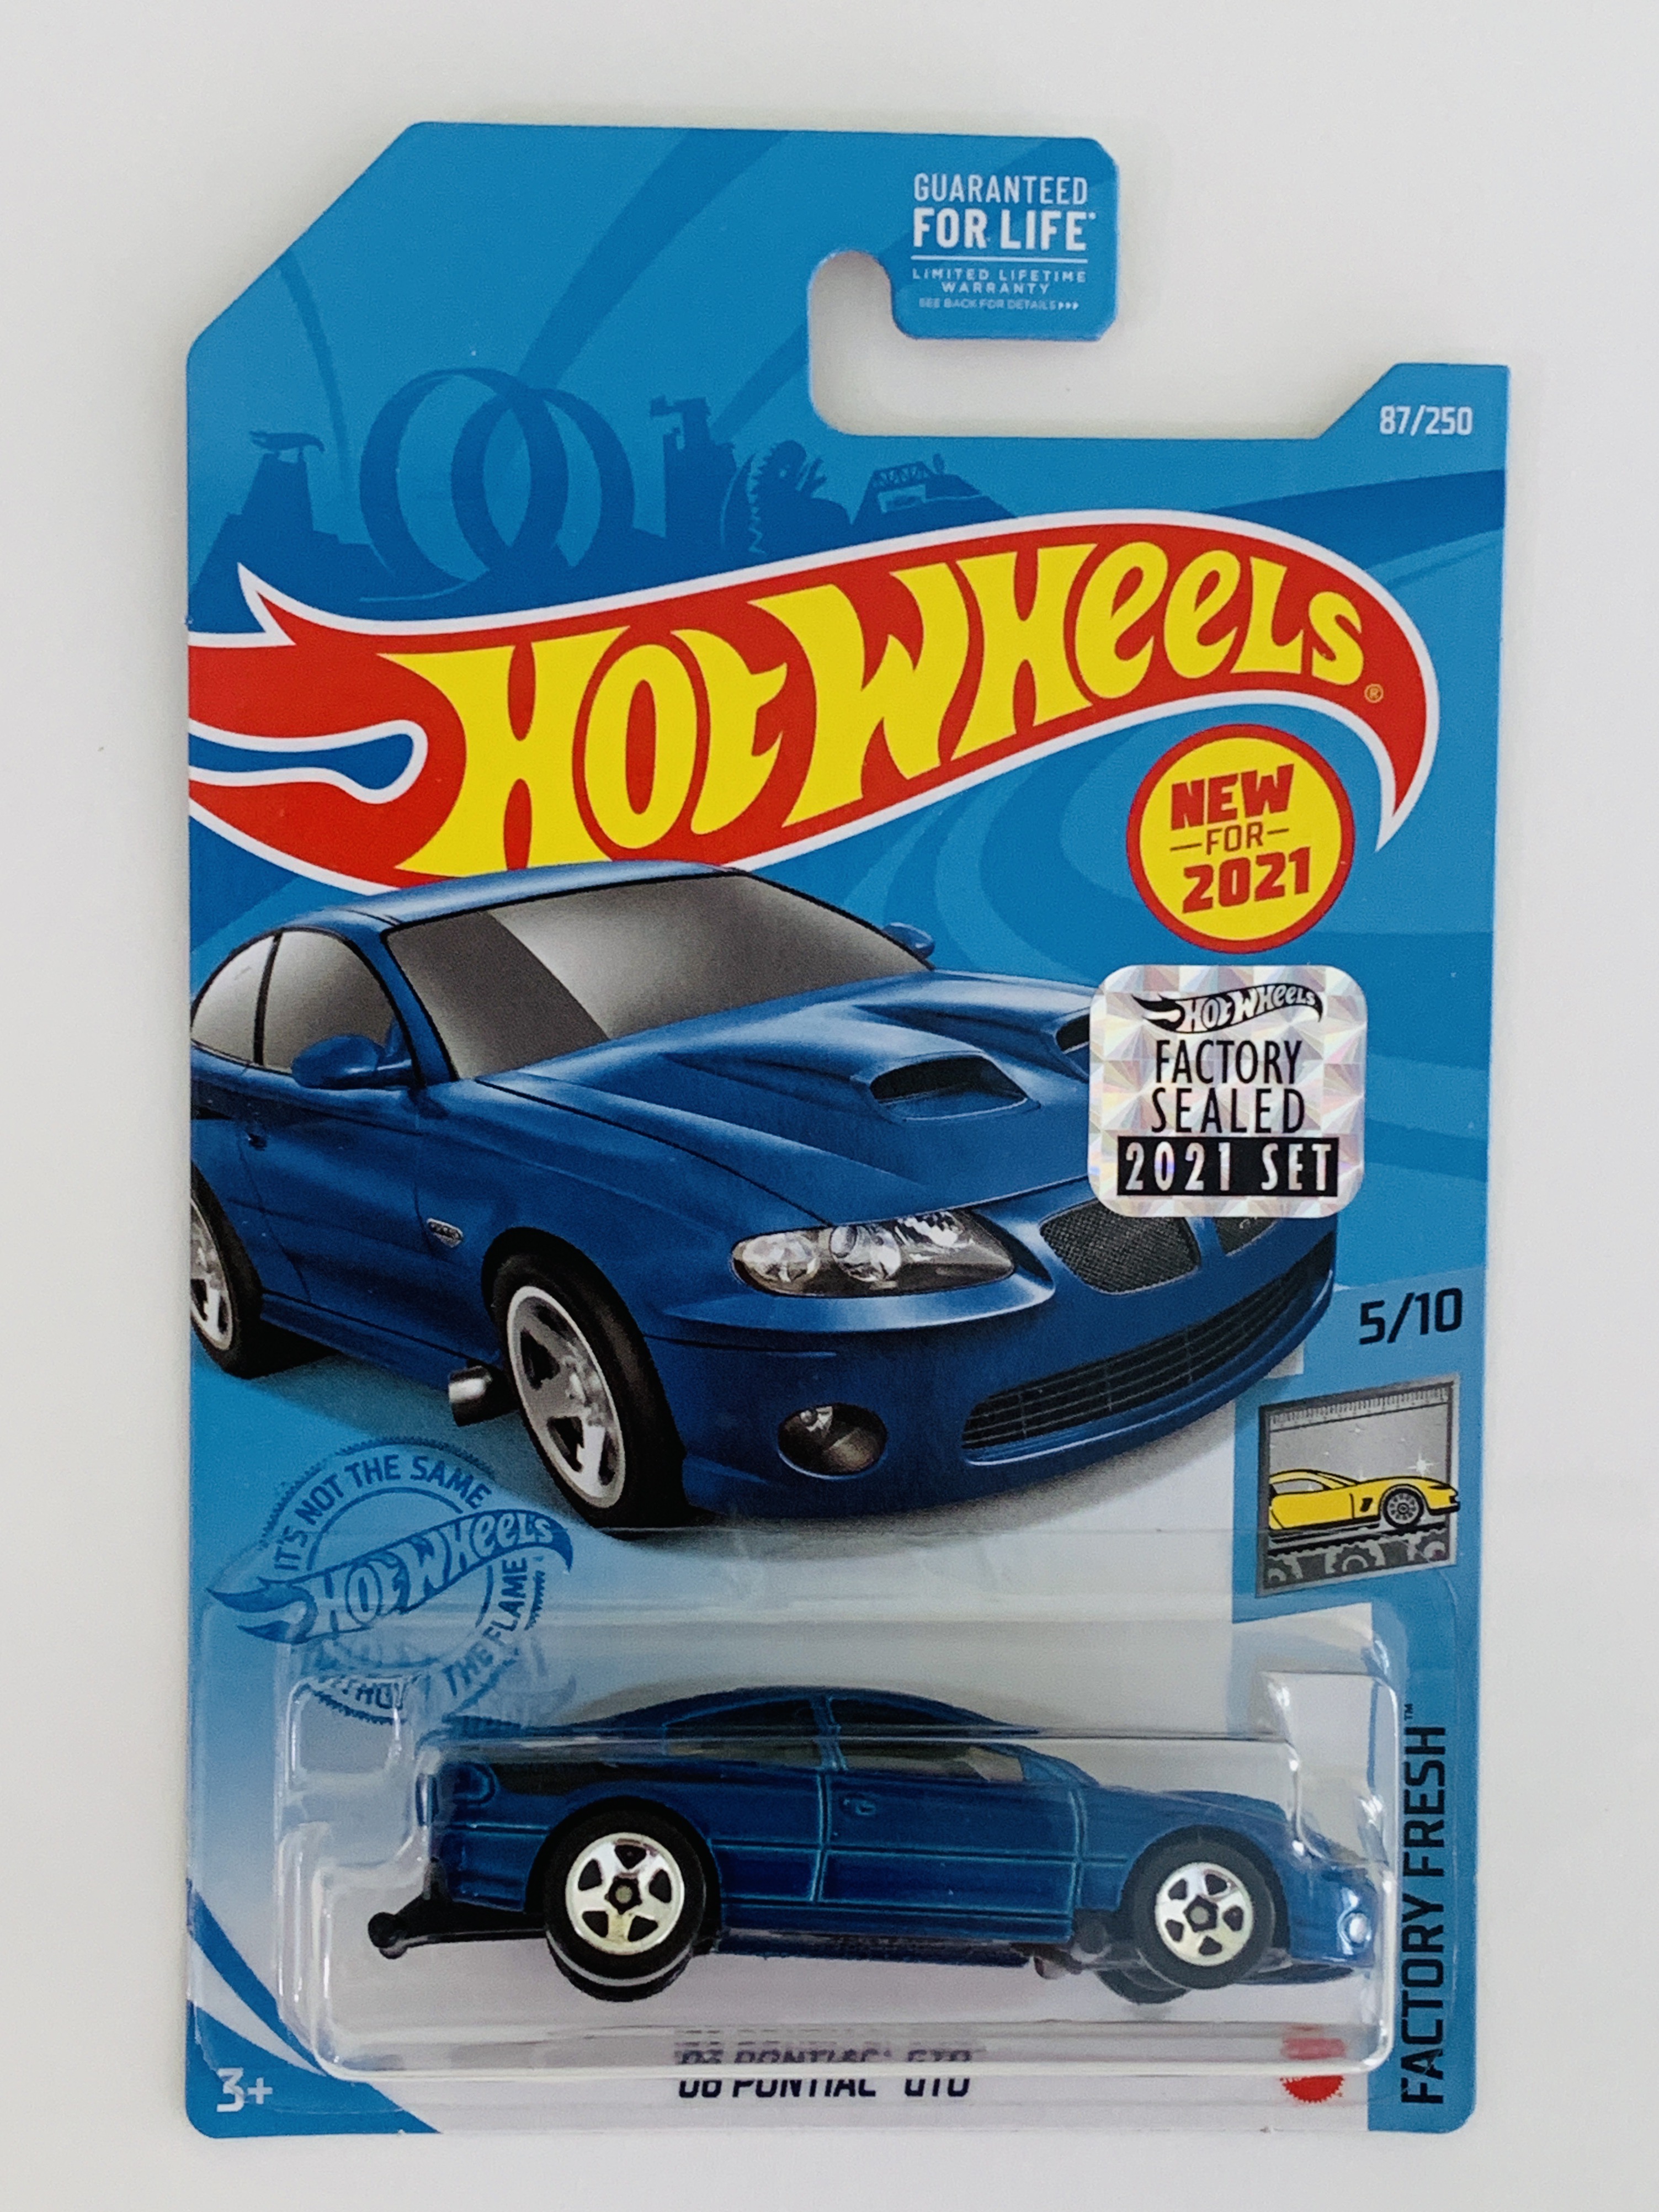 Hot Wheels 2021 Factory Set #87 '06 Pontiac GTO - Blue